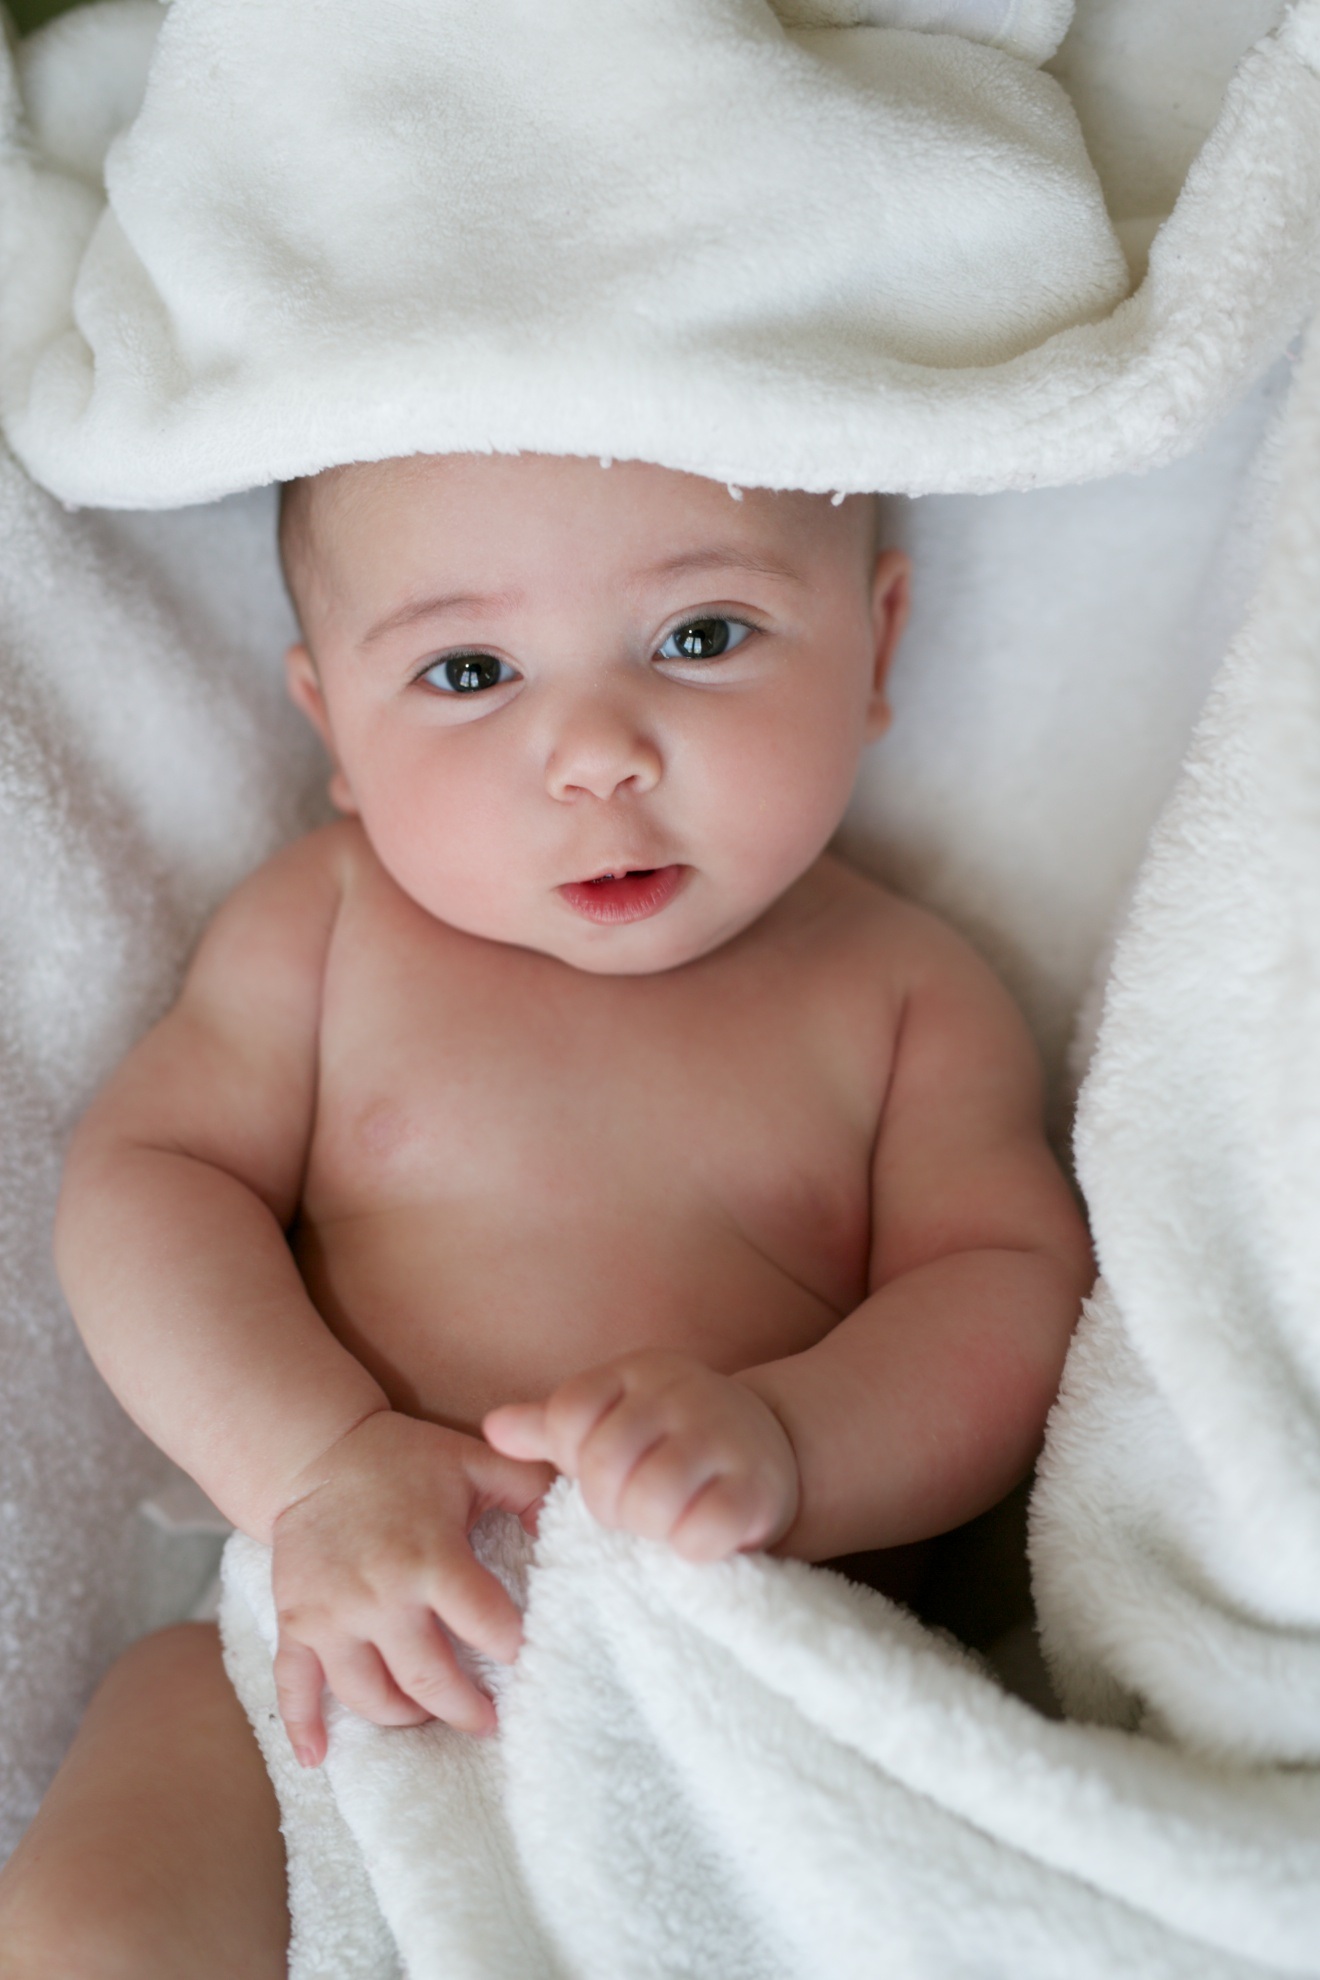 10 Ejercicios de estimulación temprana del lenguaje en bebés de 0 a 3 meses